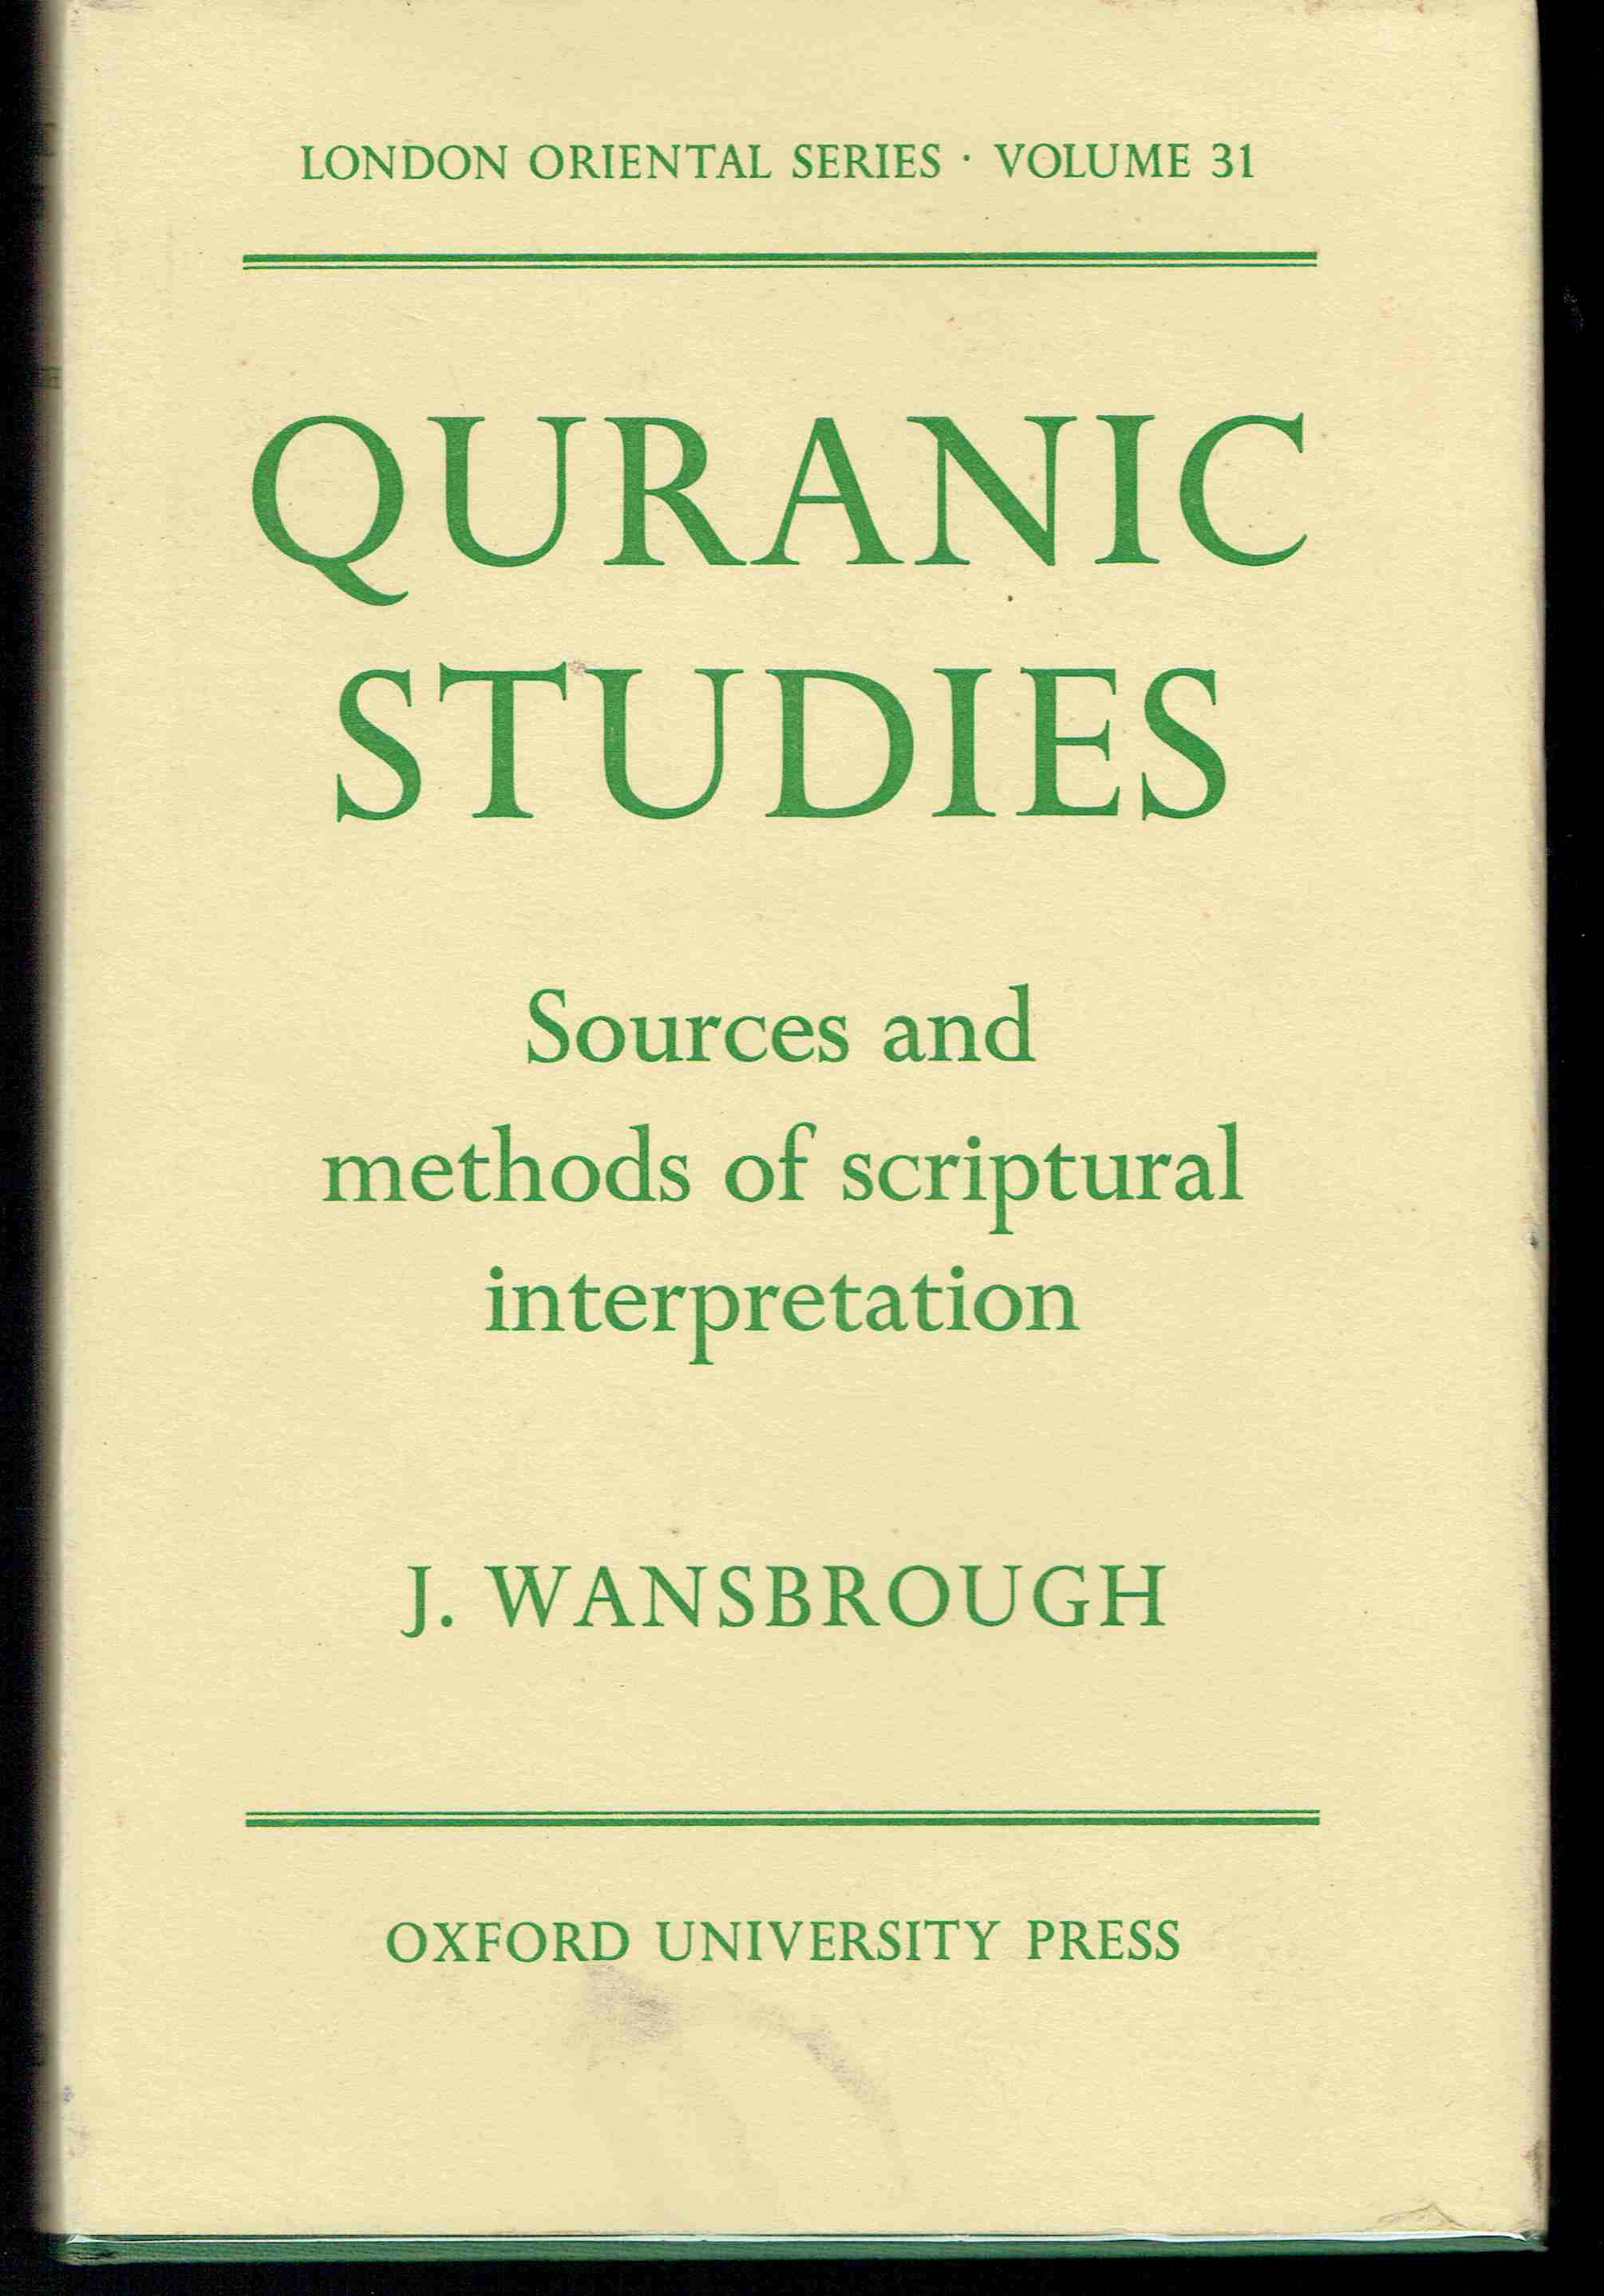 Quranic Studies: Sources and Methods of Scriptural Interpretation - Wansbrough, John